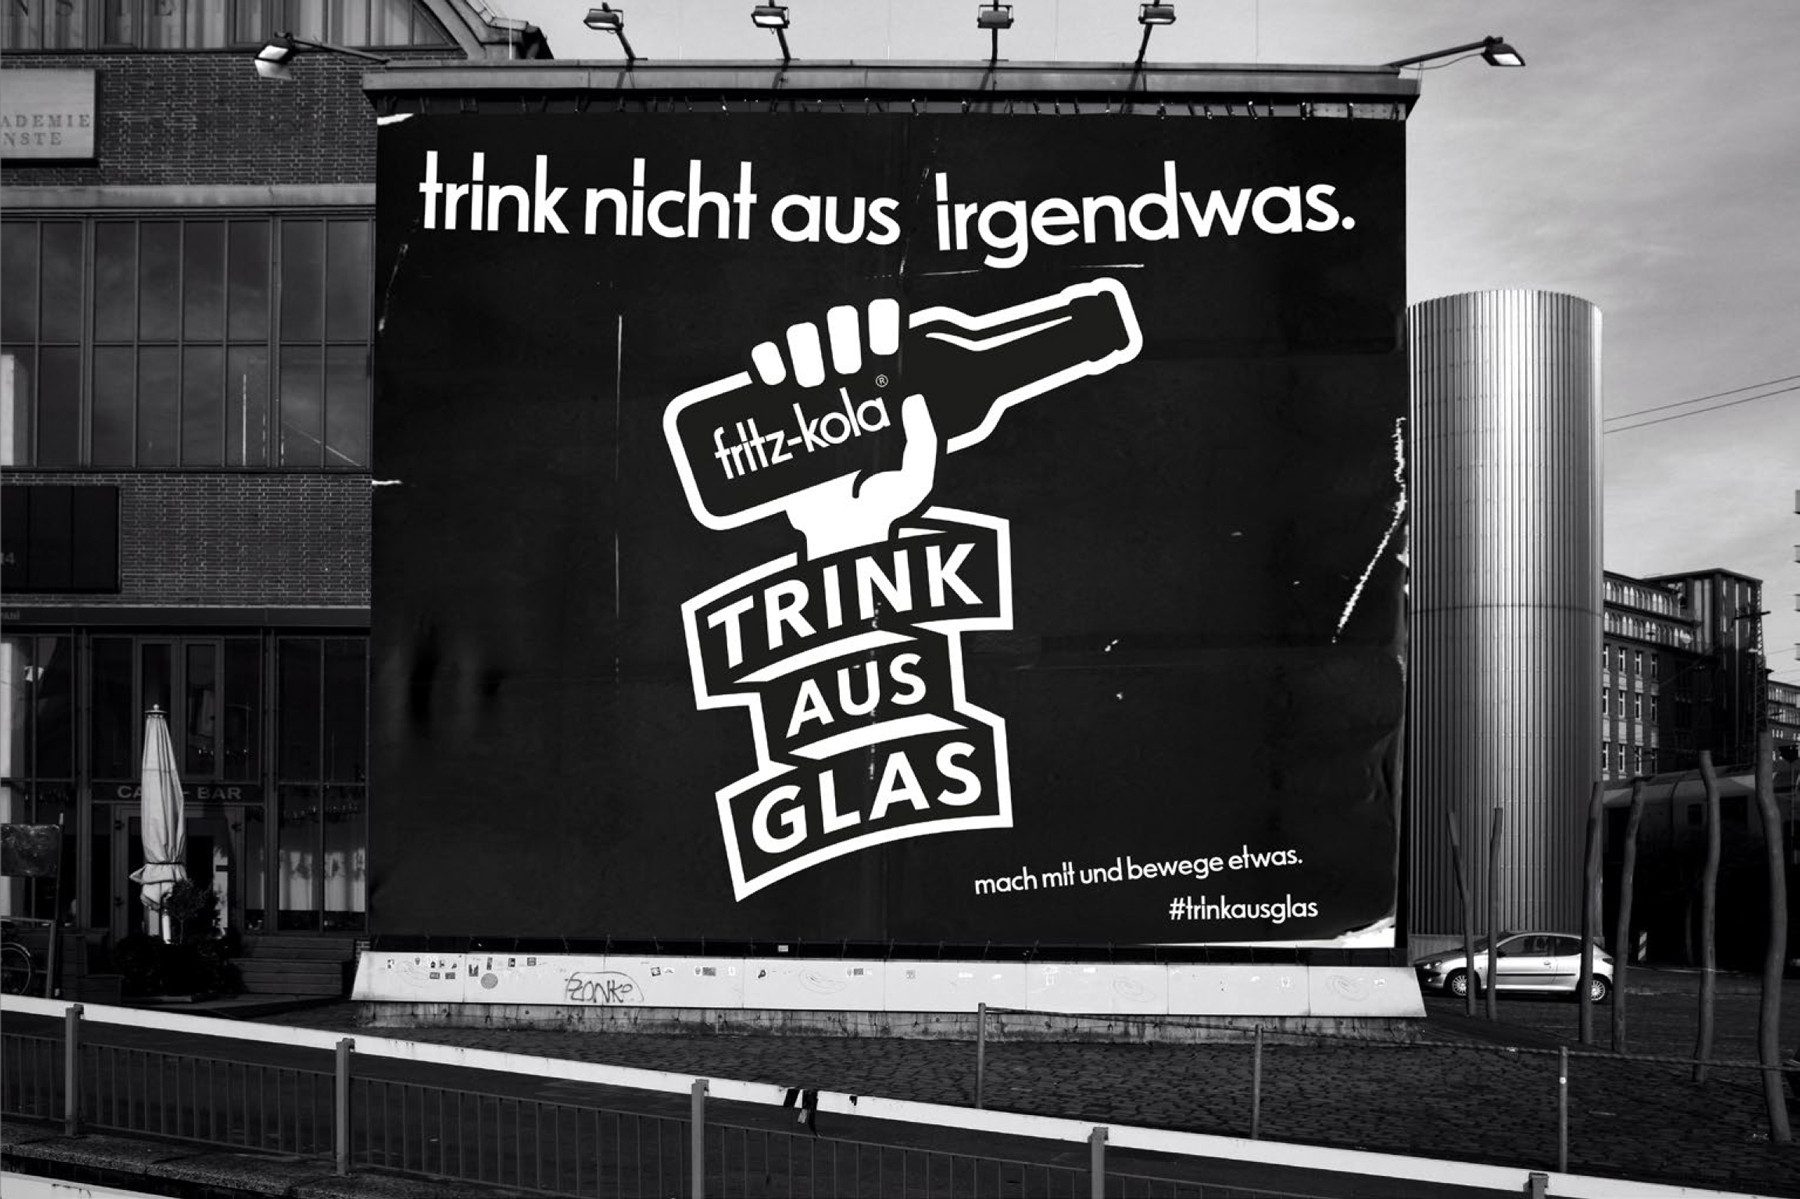 fritz-kola. trink aus glas. 1